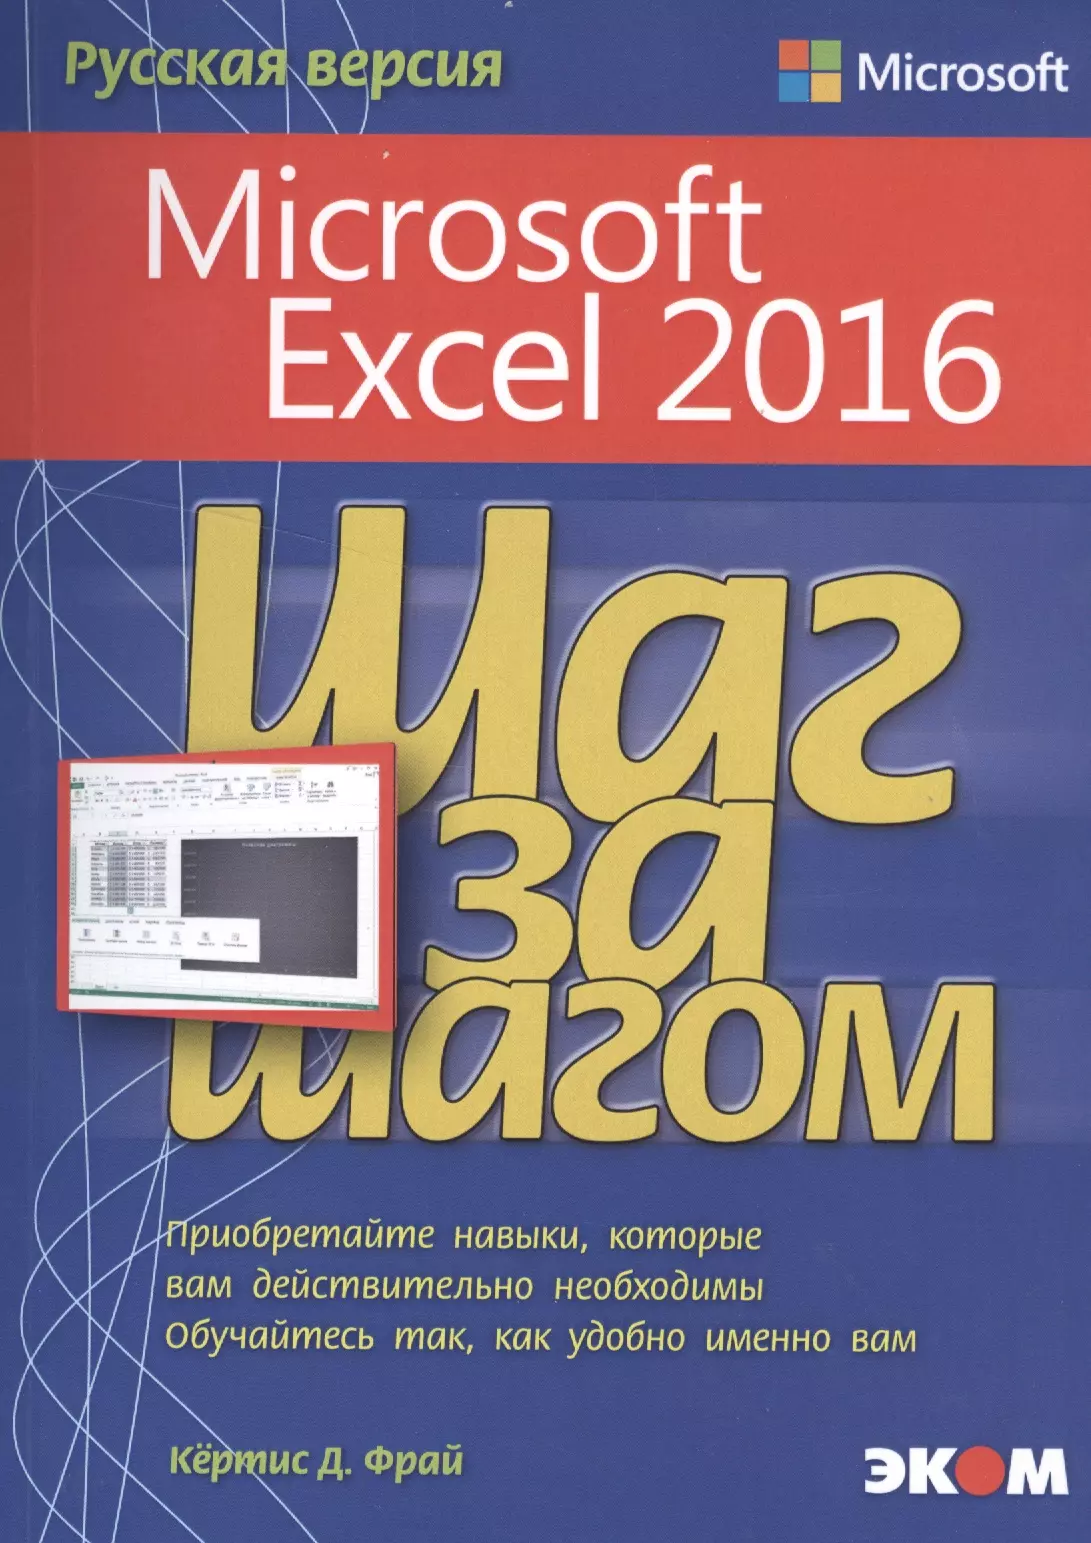 Фрай Кертис Д. - Microsoft Excel 2016 Русская версия (мШзШ) Фрай